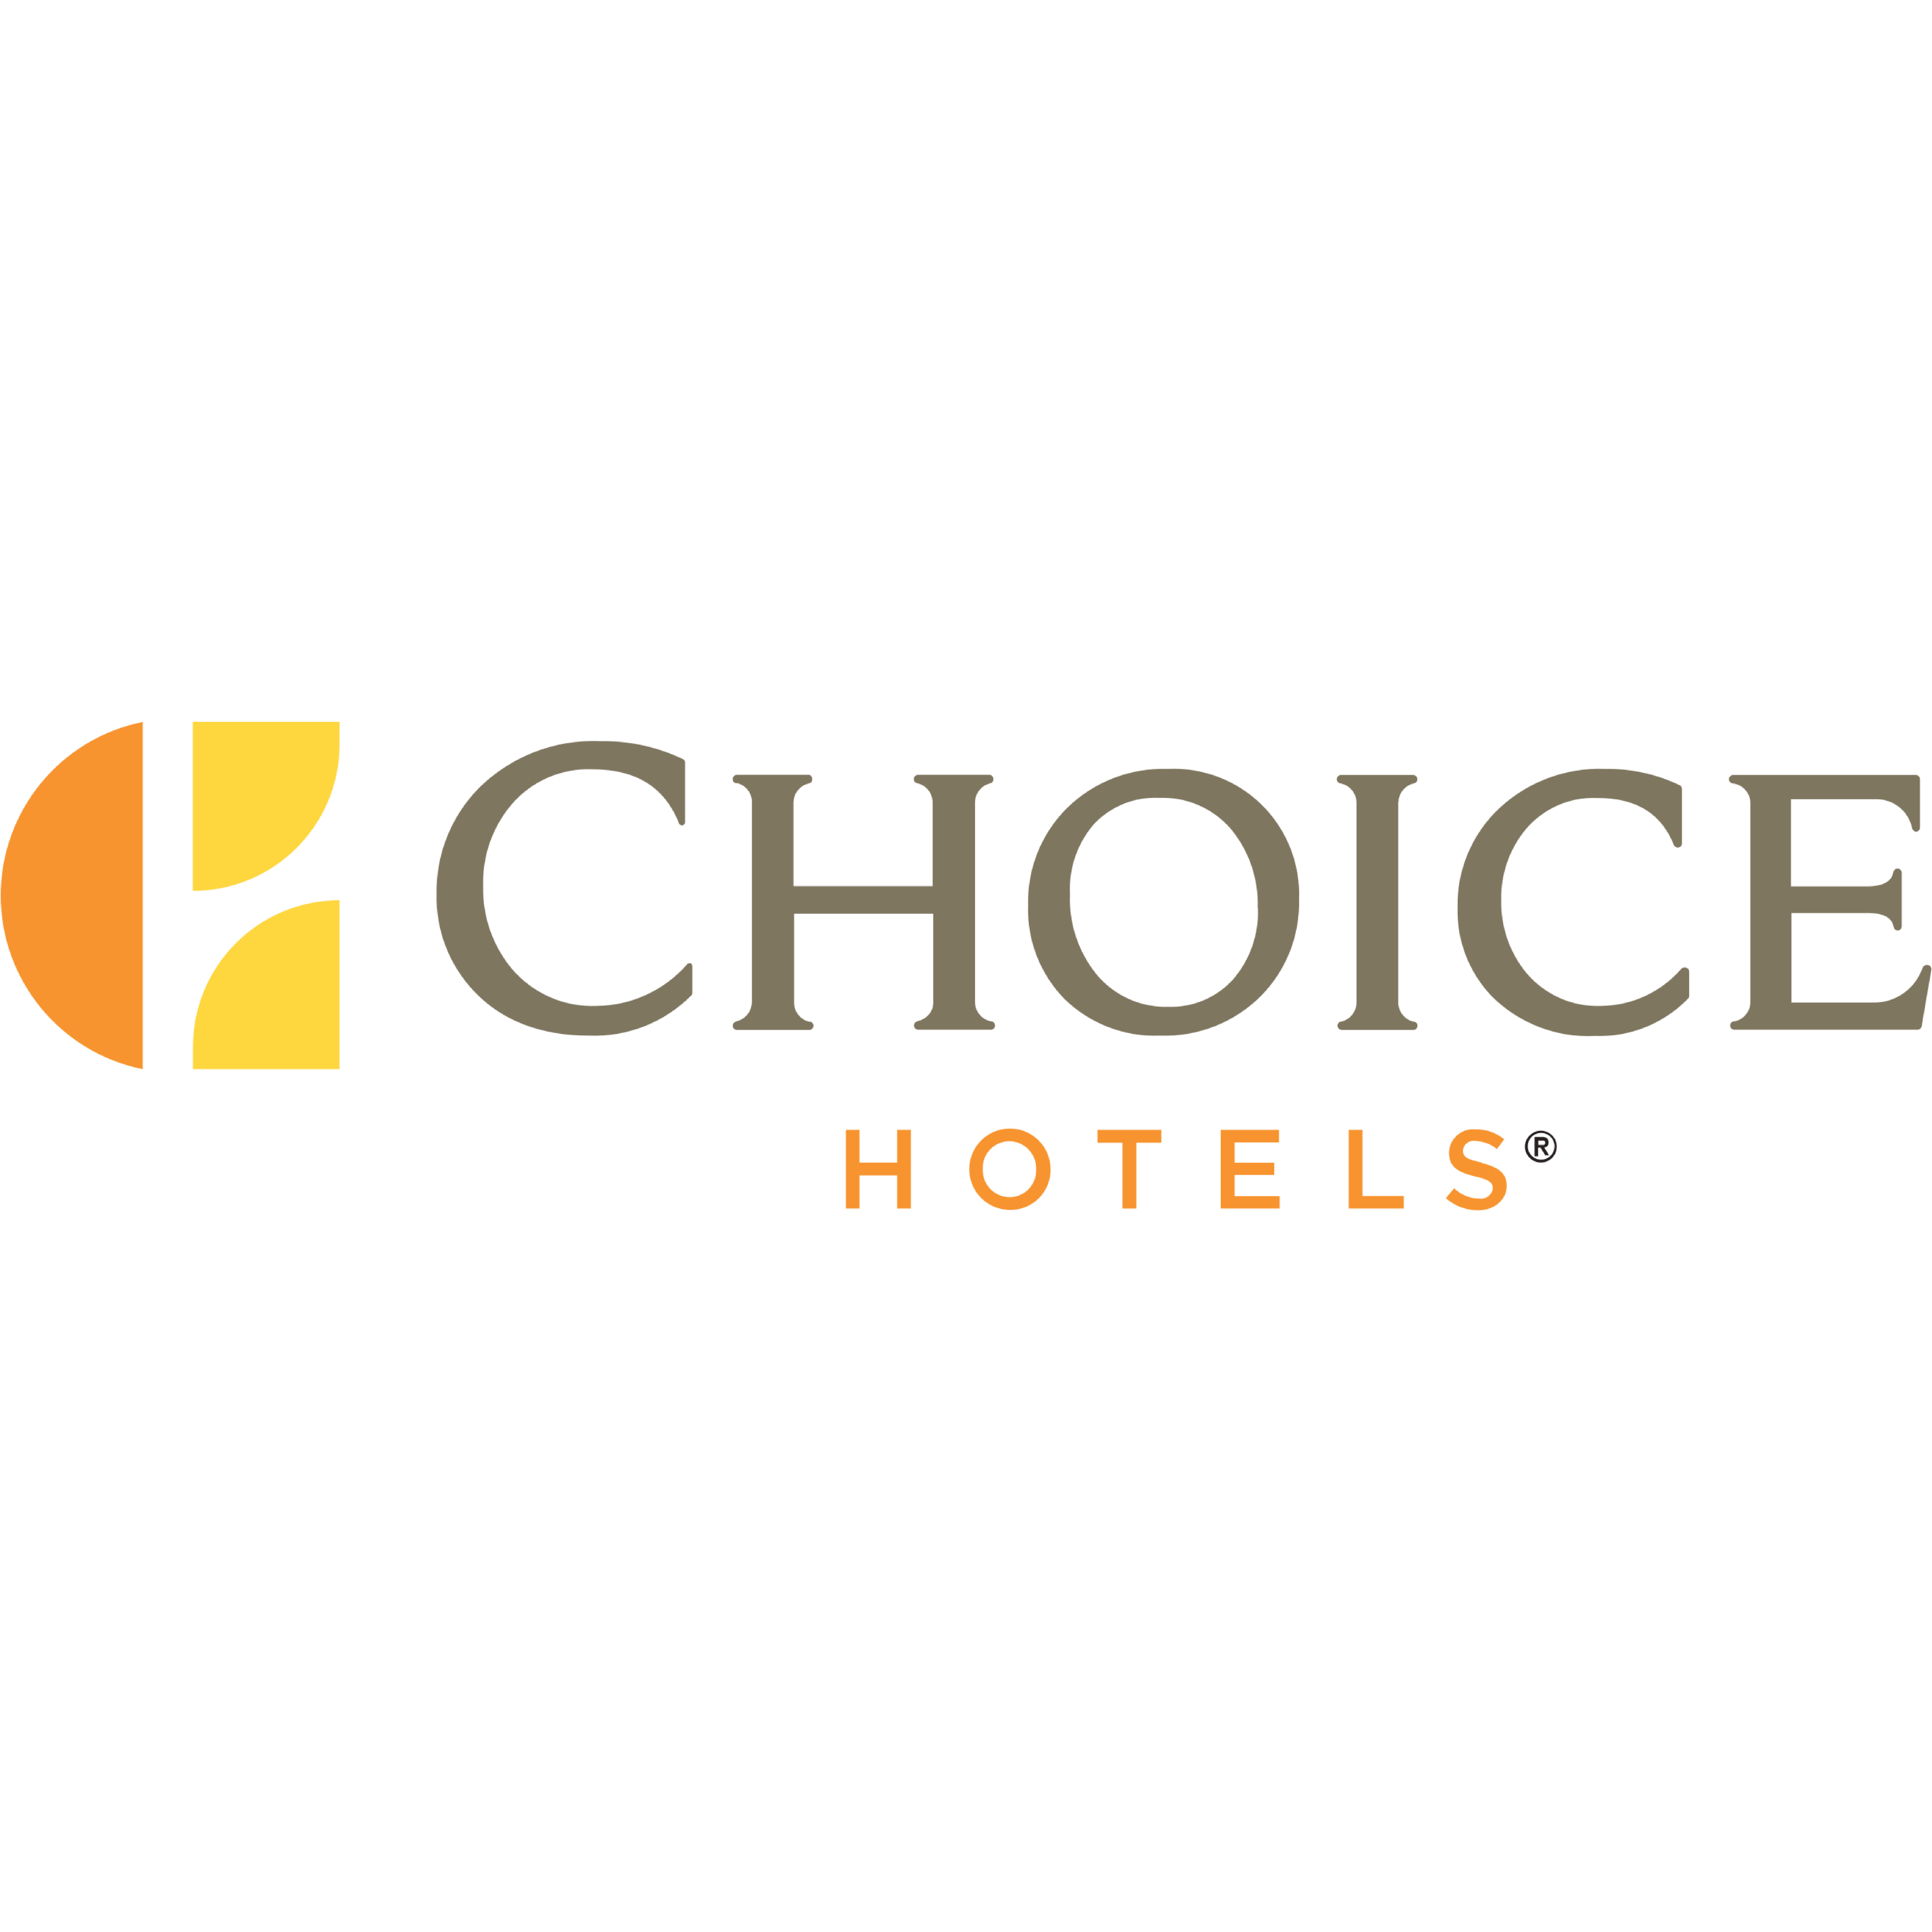 CHOICE-Hotels-LOGO-01